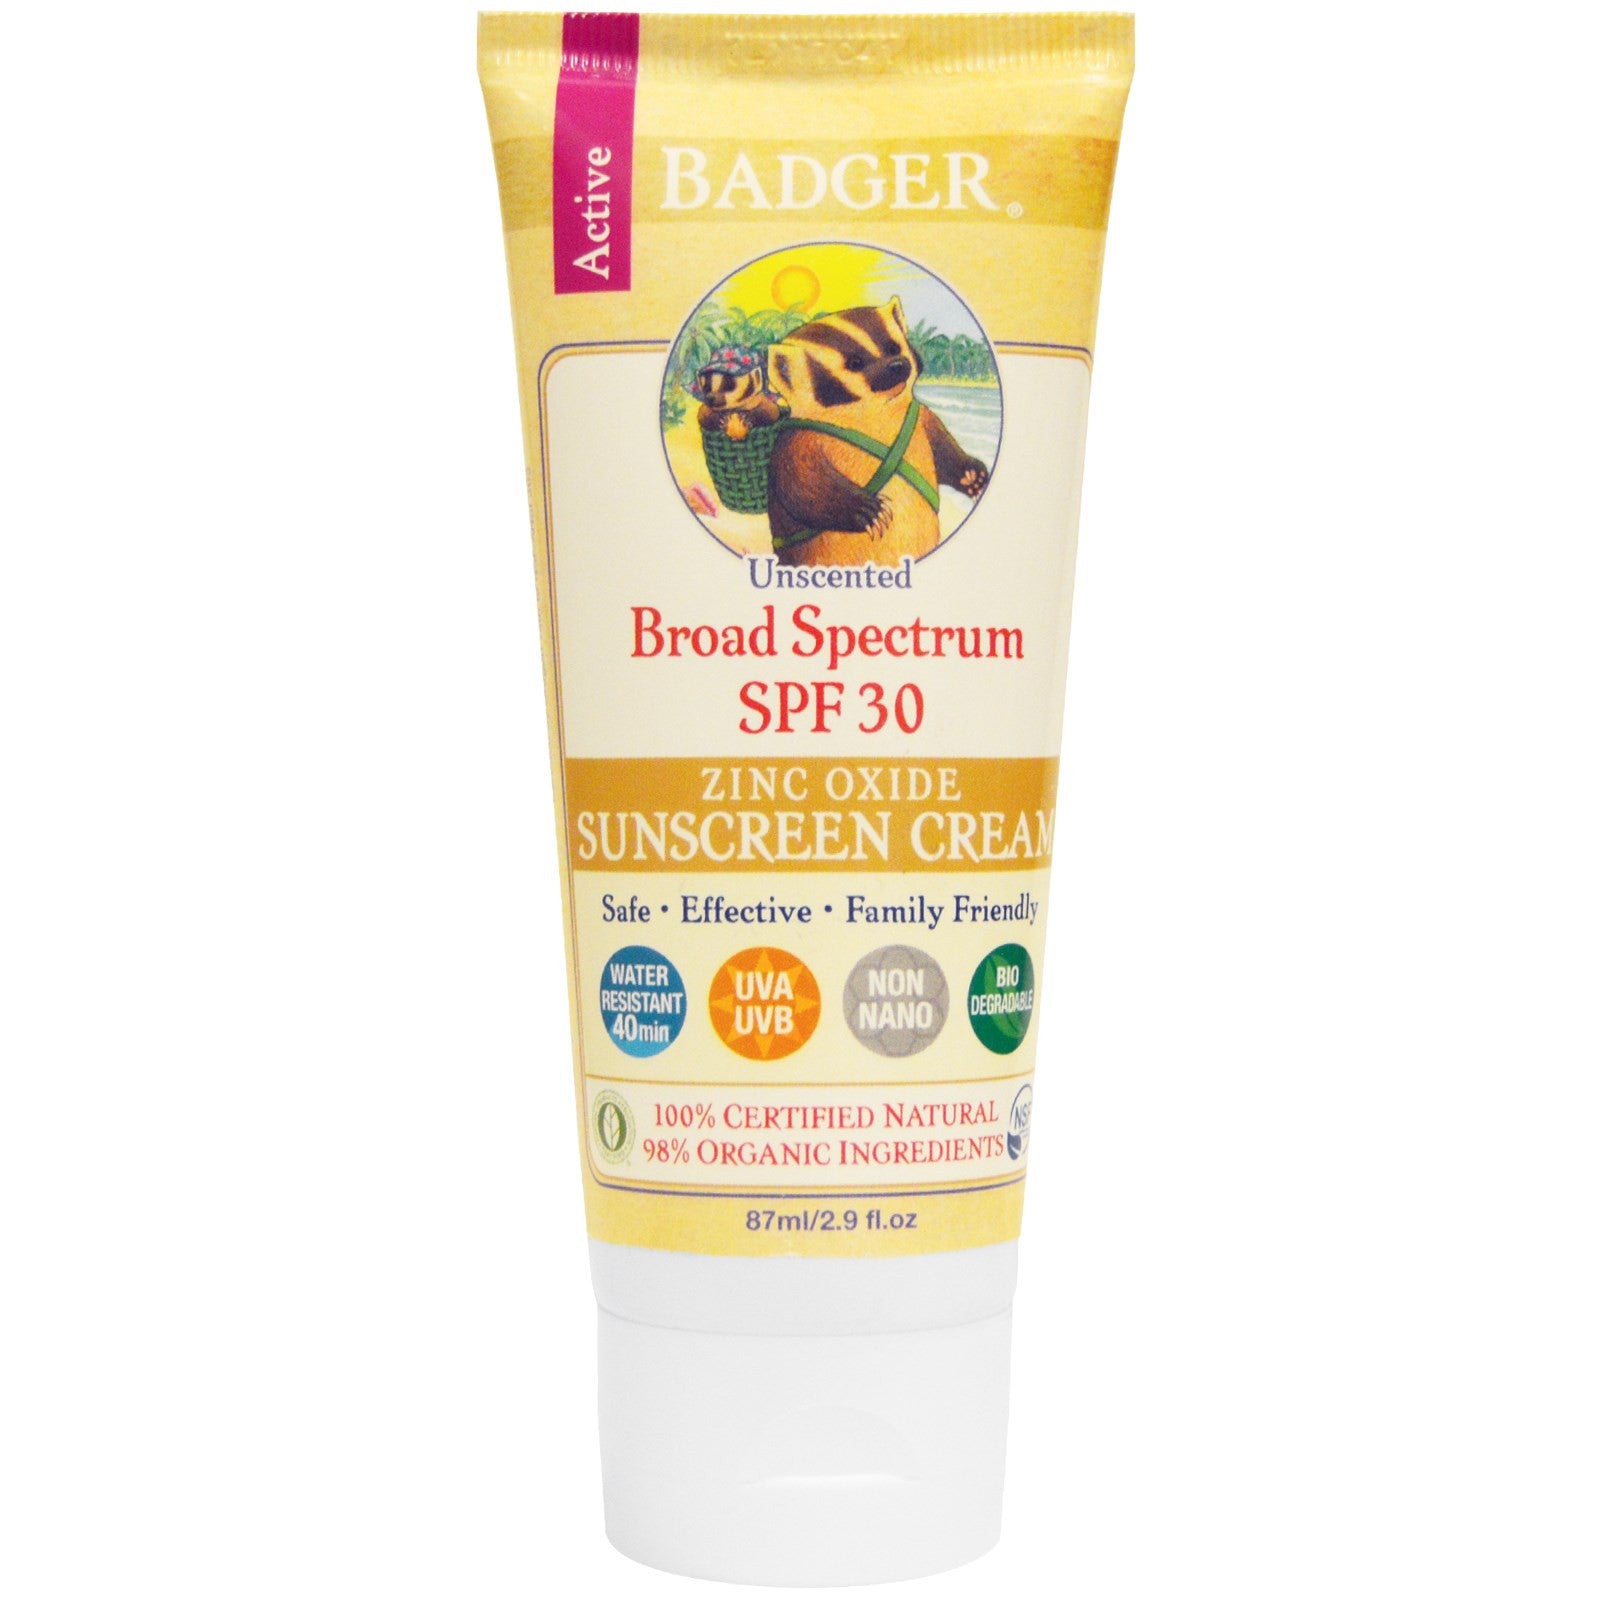 Badger All Natural Sunscreen SPF 30